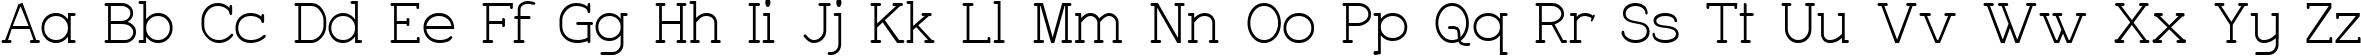 Пример написания английского алфавита шрифтом Charrington